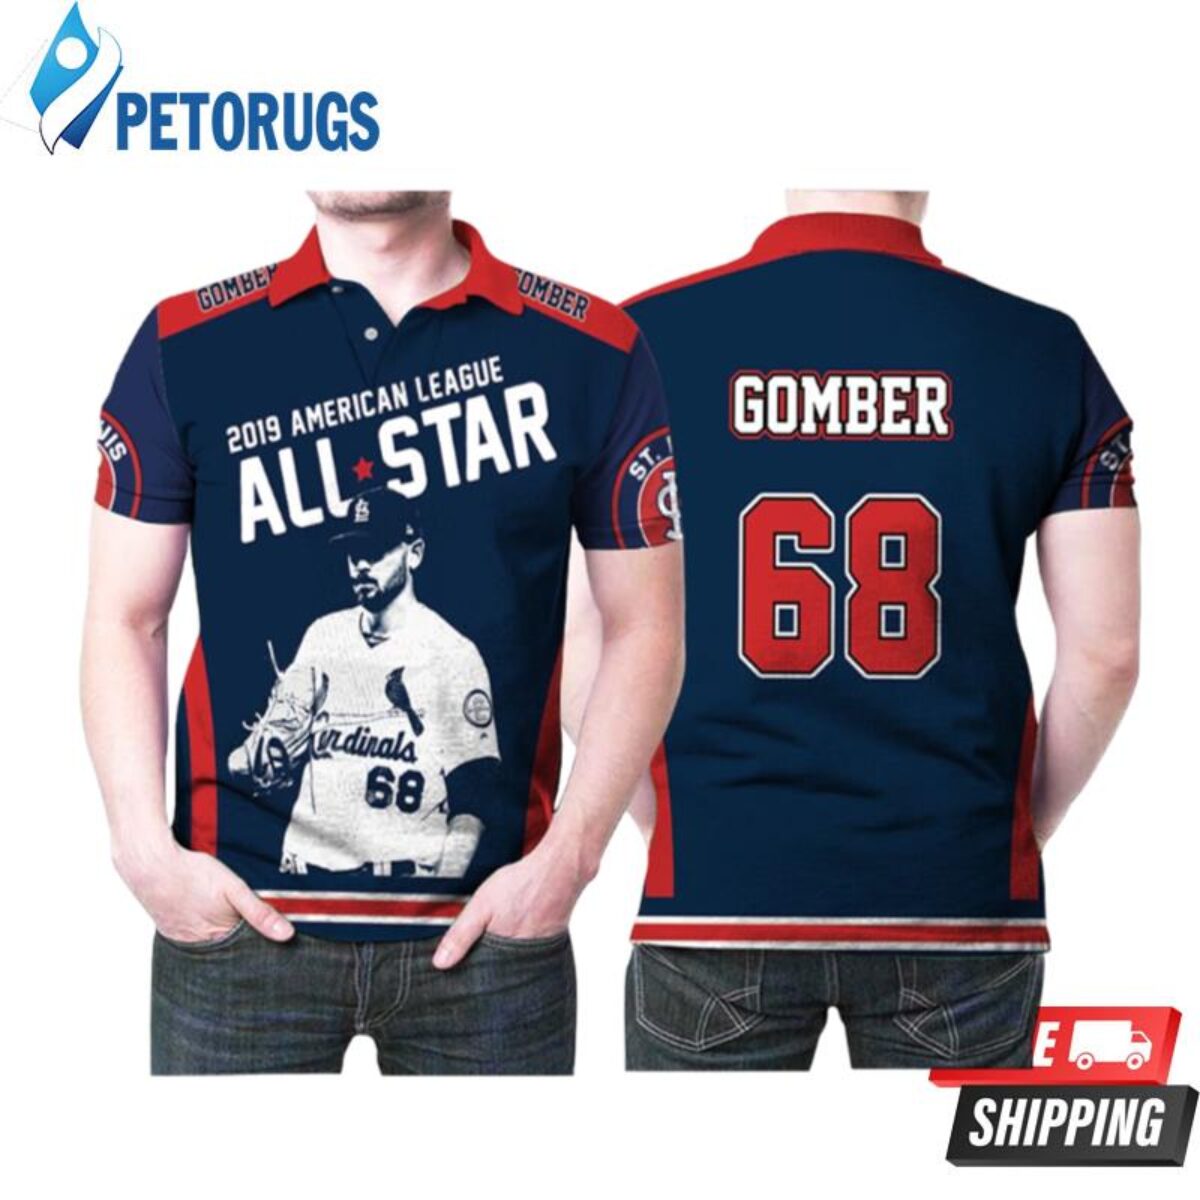 St. Louis Cardinals Major League Baseball MLB Baseball Jersey Shirt Custom  Name & Number